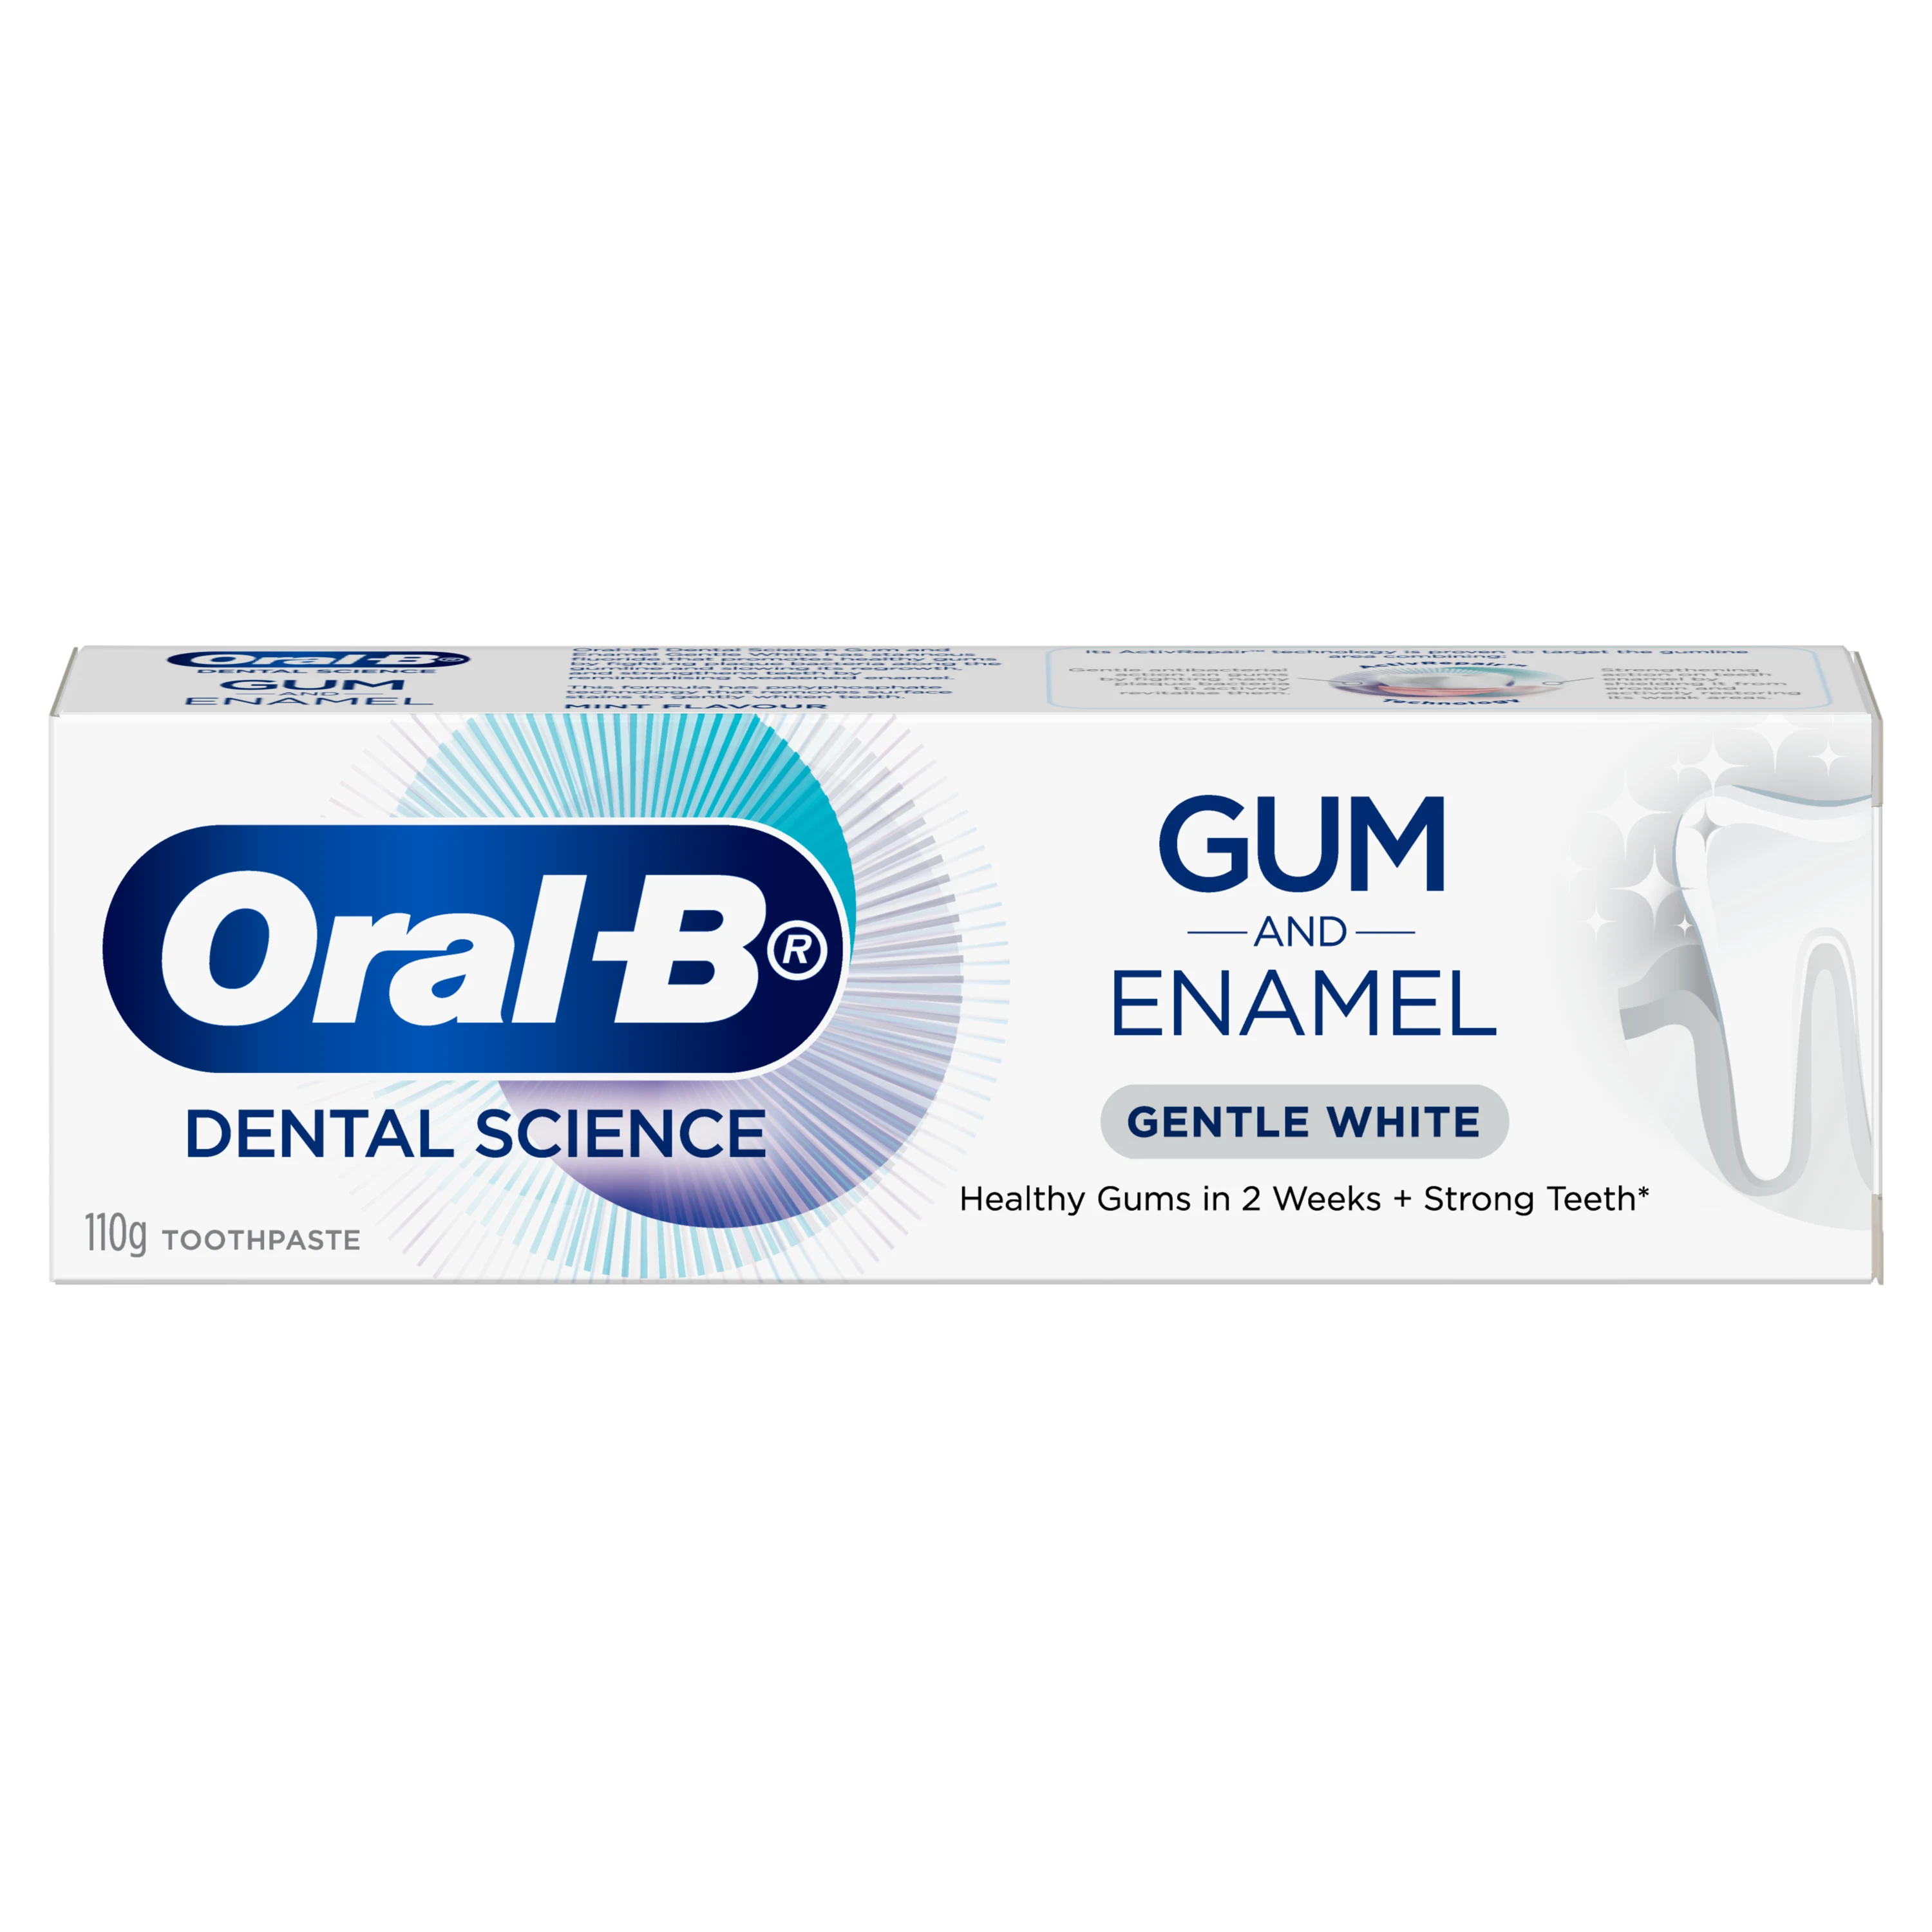 Oral-B Dental Science Gum & Enamel Gentle White Toothpaste 